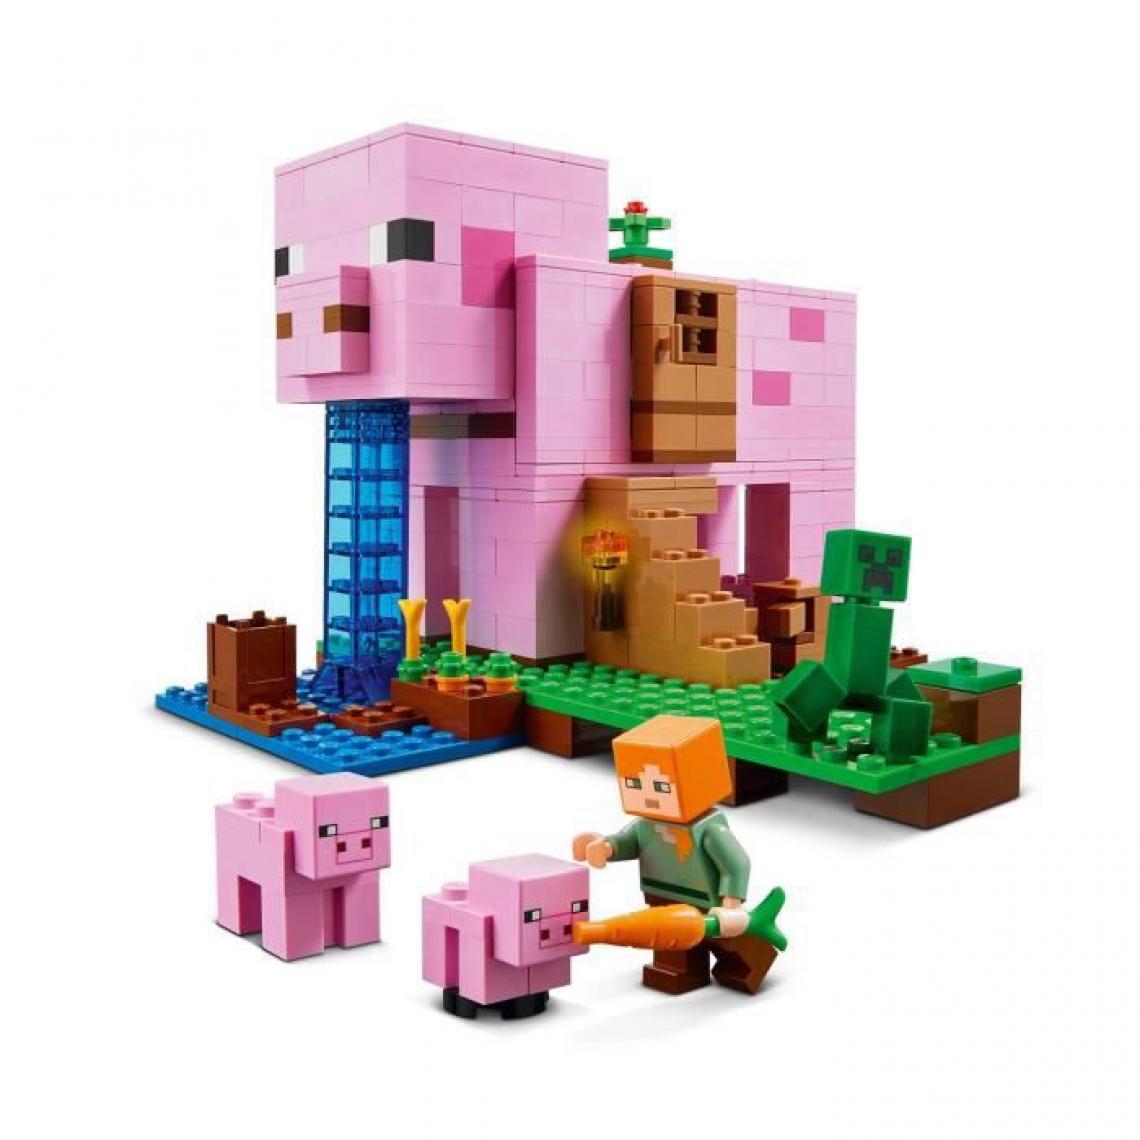 Lego - LEGO Minecraft 21170 Le jeu de construction de La Maison Cochon incluant les figurines d'Alex et de Creeper - Briques et blocs